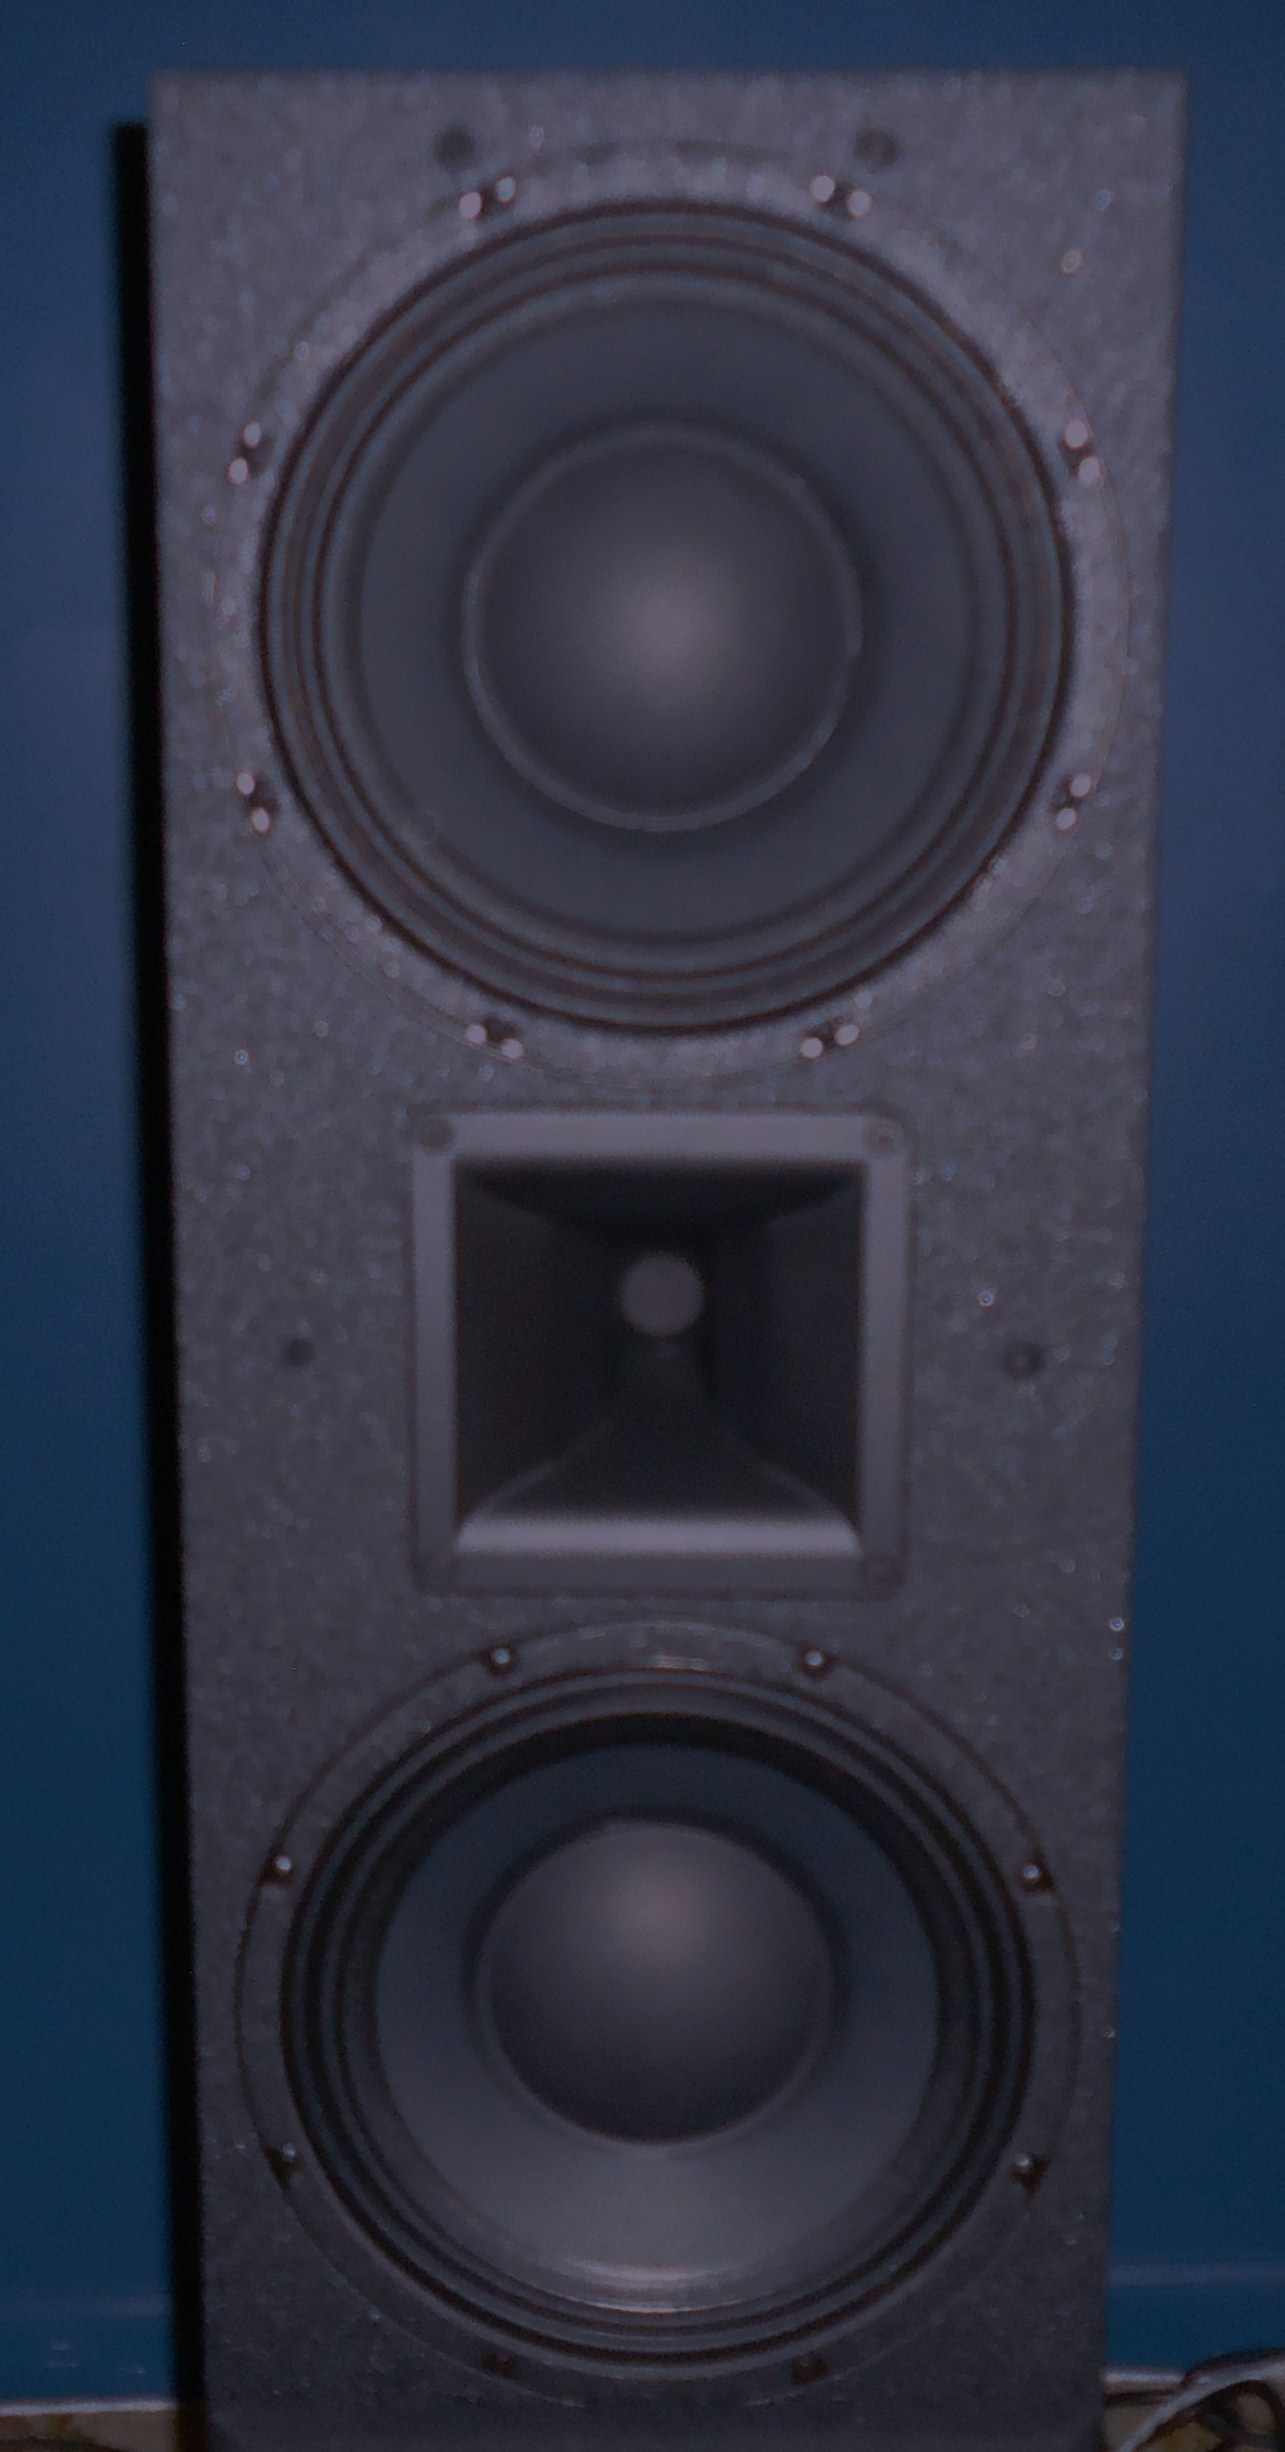 psa speakers 002.JPG